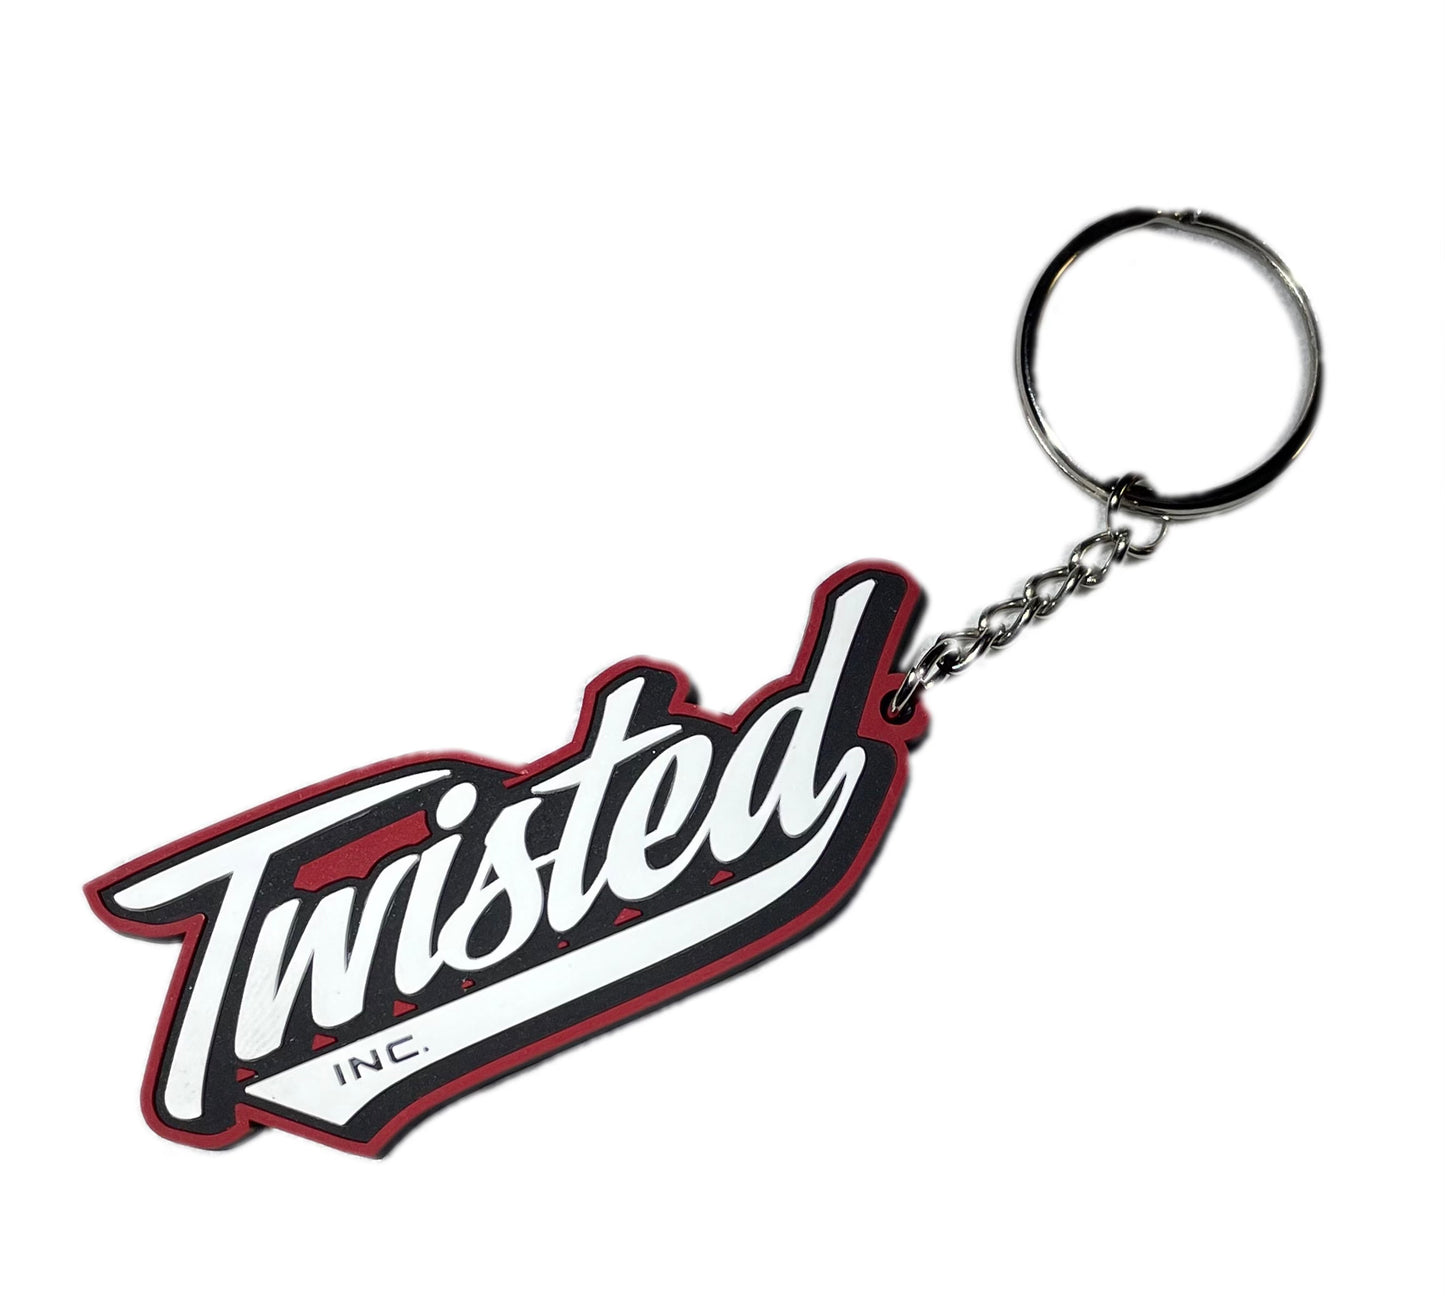 "Twisted Inc" keychains